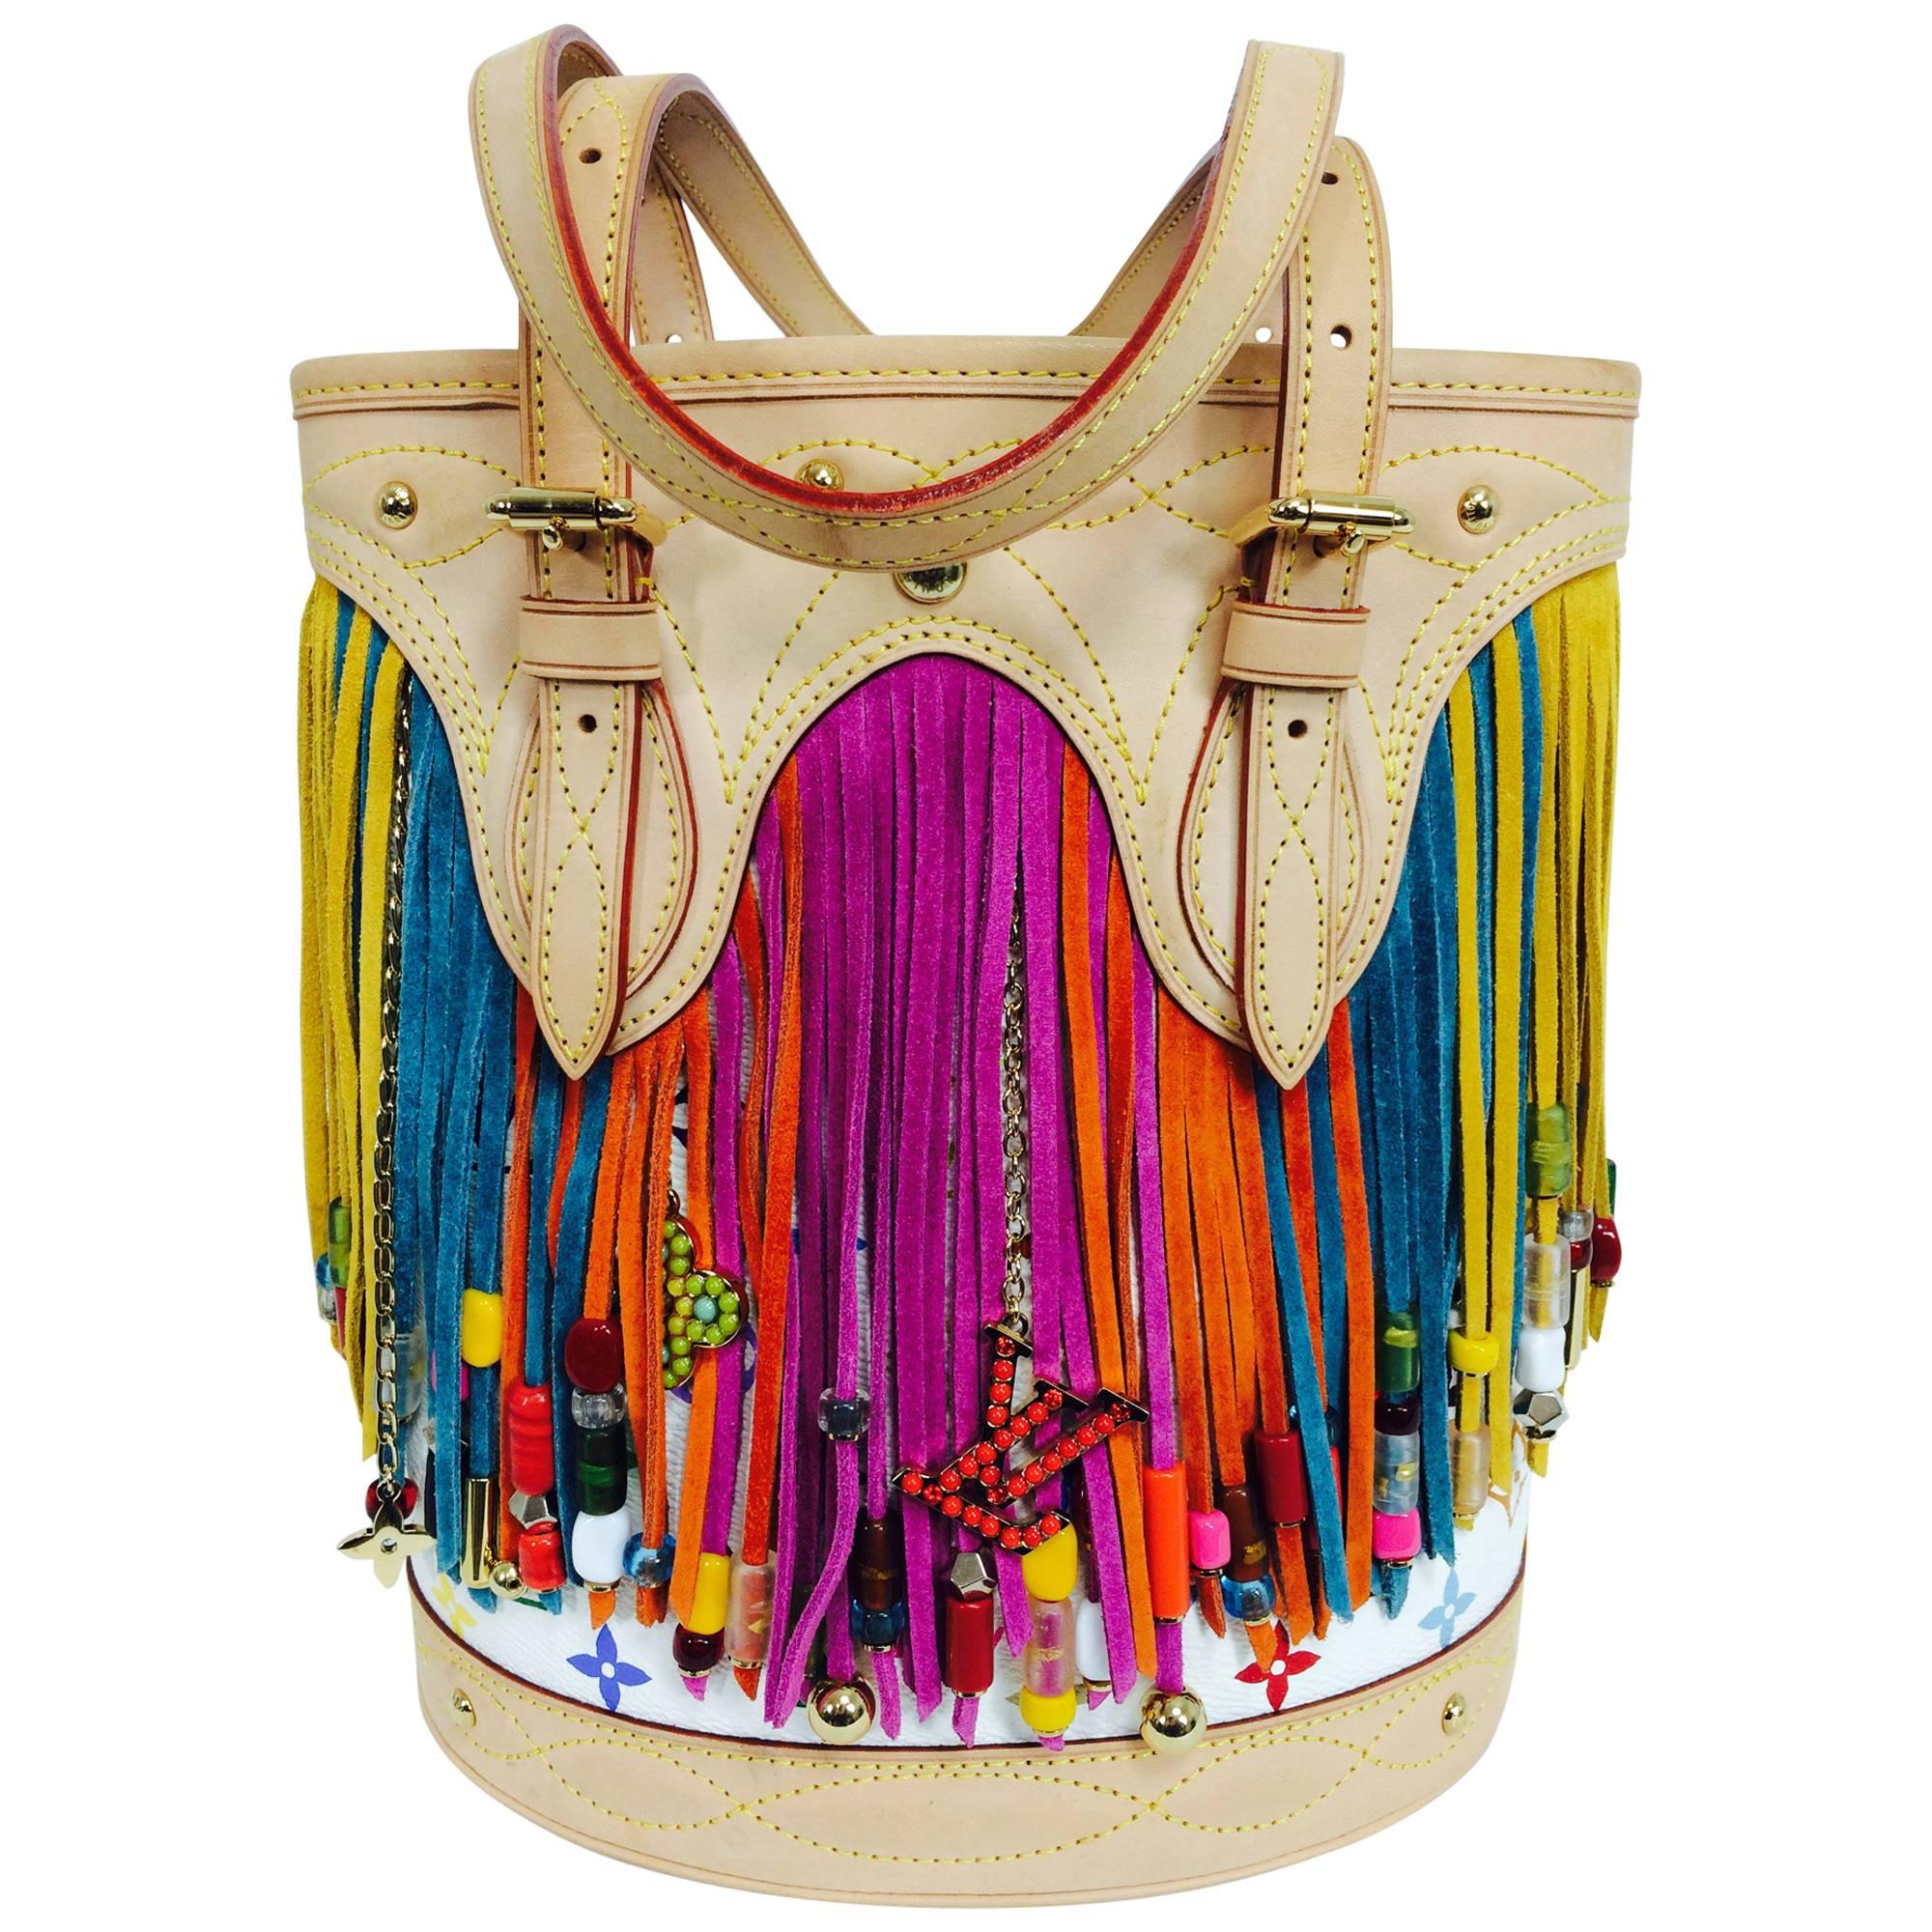 Louis Vuitton Multicolore Fringe Bucket Bag designed by Takashi Murakami 2006